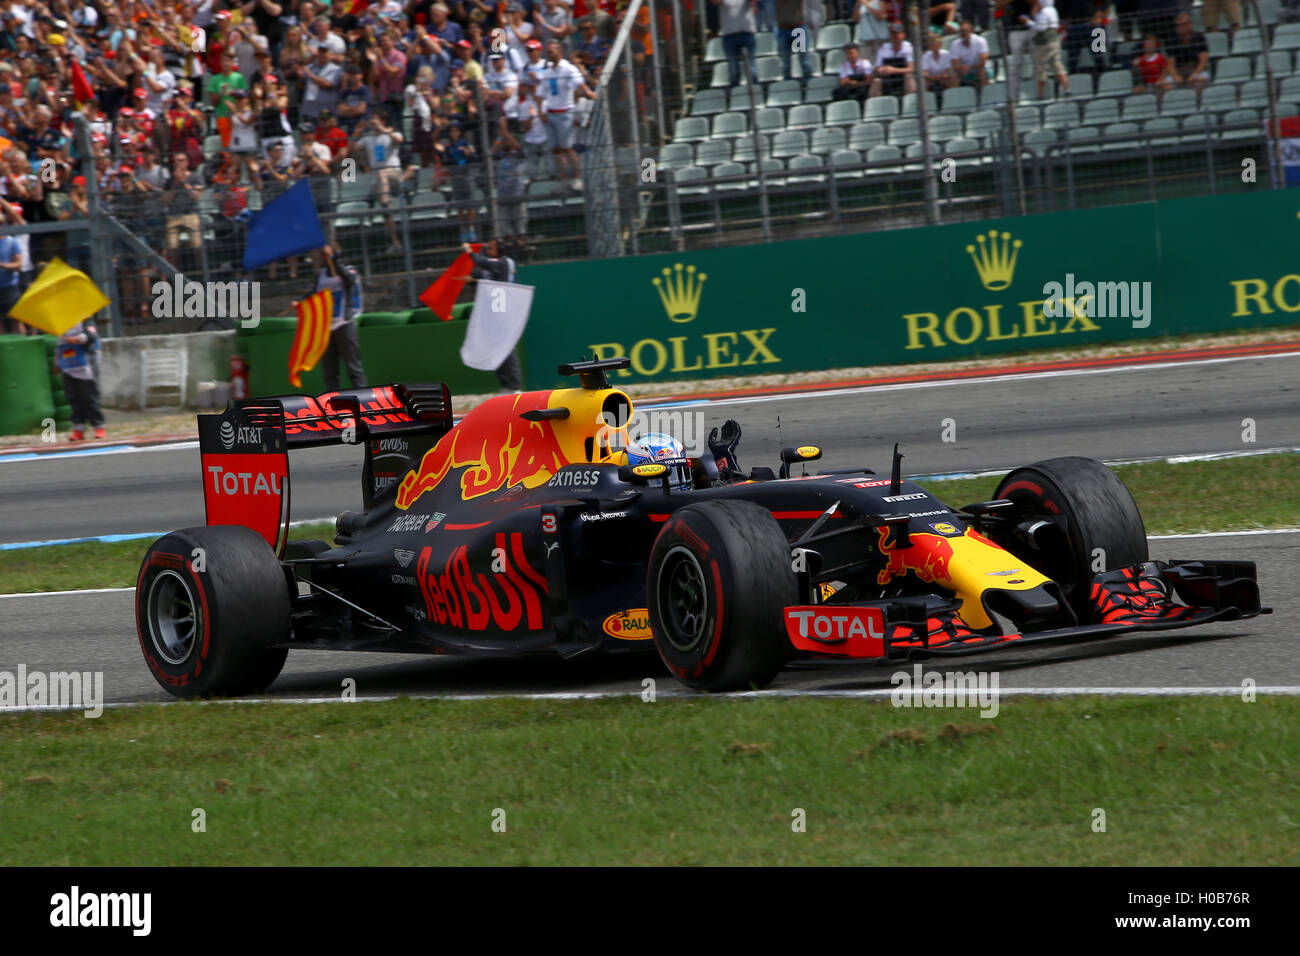 Daniel Ricciardo, la Red Bull Racing, il Gp di Germania 2016, Hockenheim Foto Stock